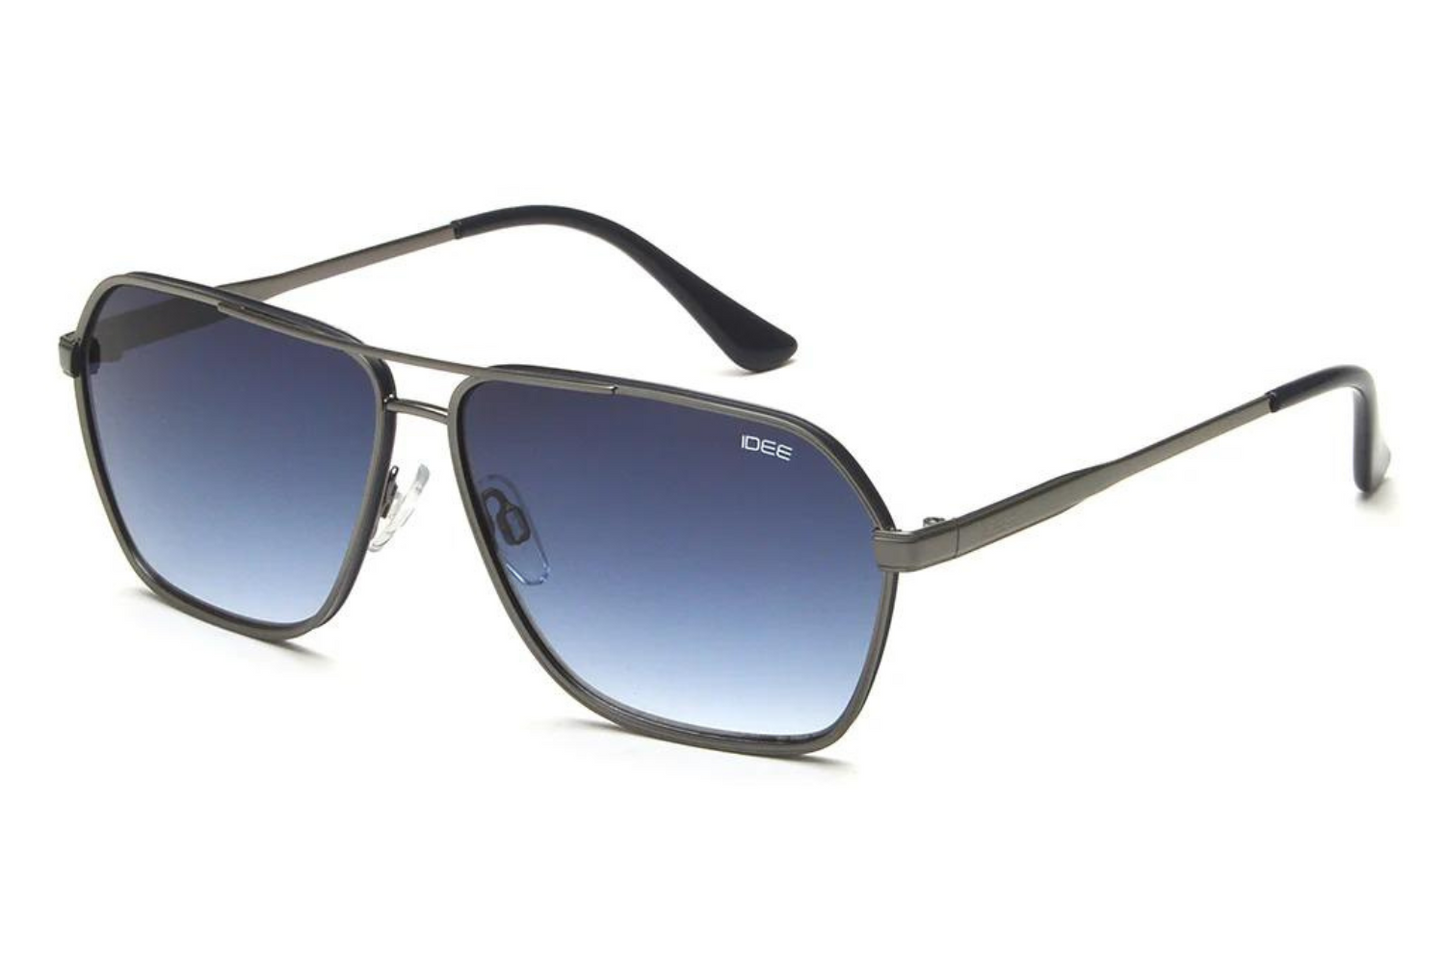 IDEE Sunglasses S3134